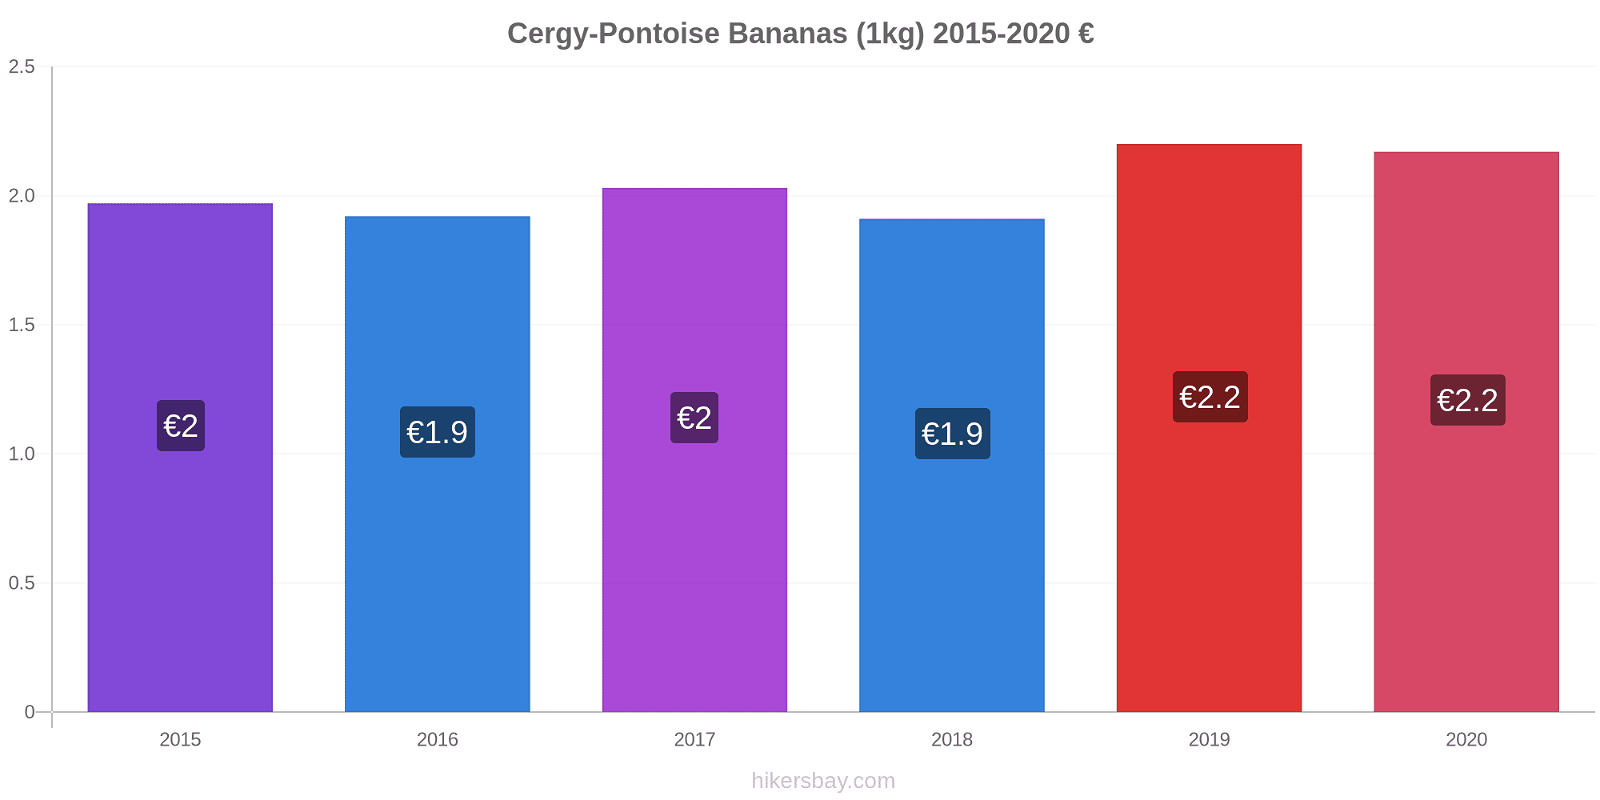 Cergy-Pontoise price changes Bananas (1kg) hikersbay.com